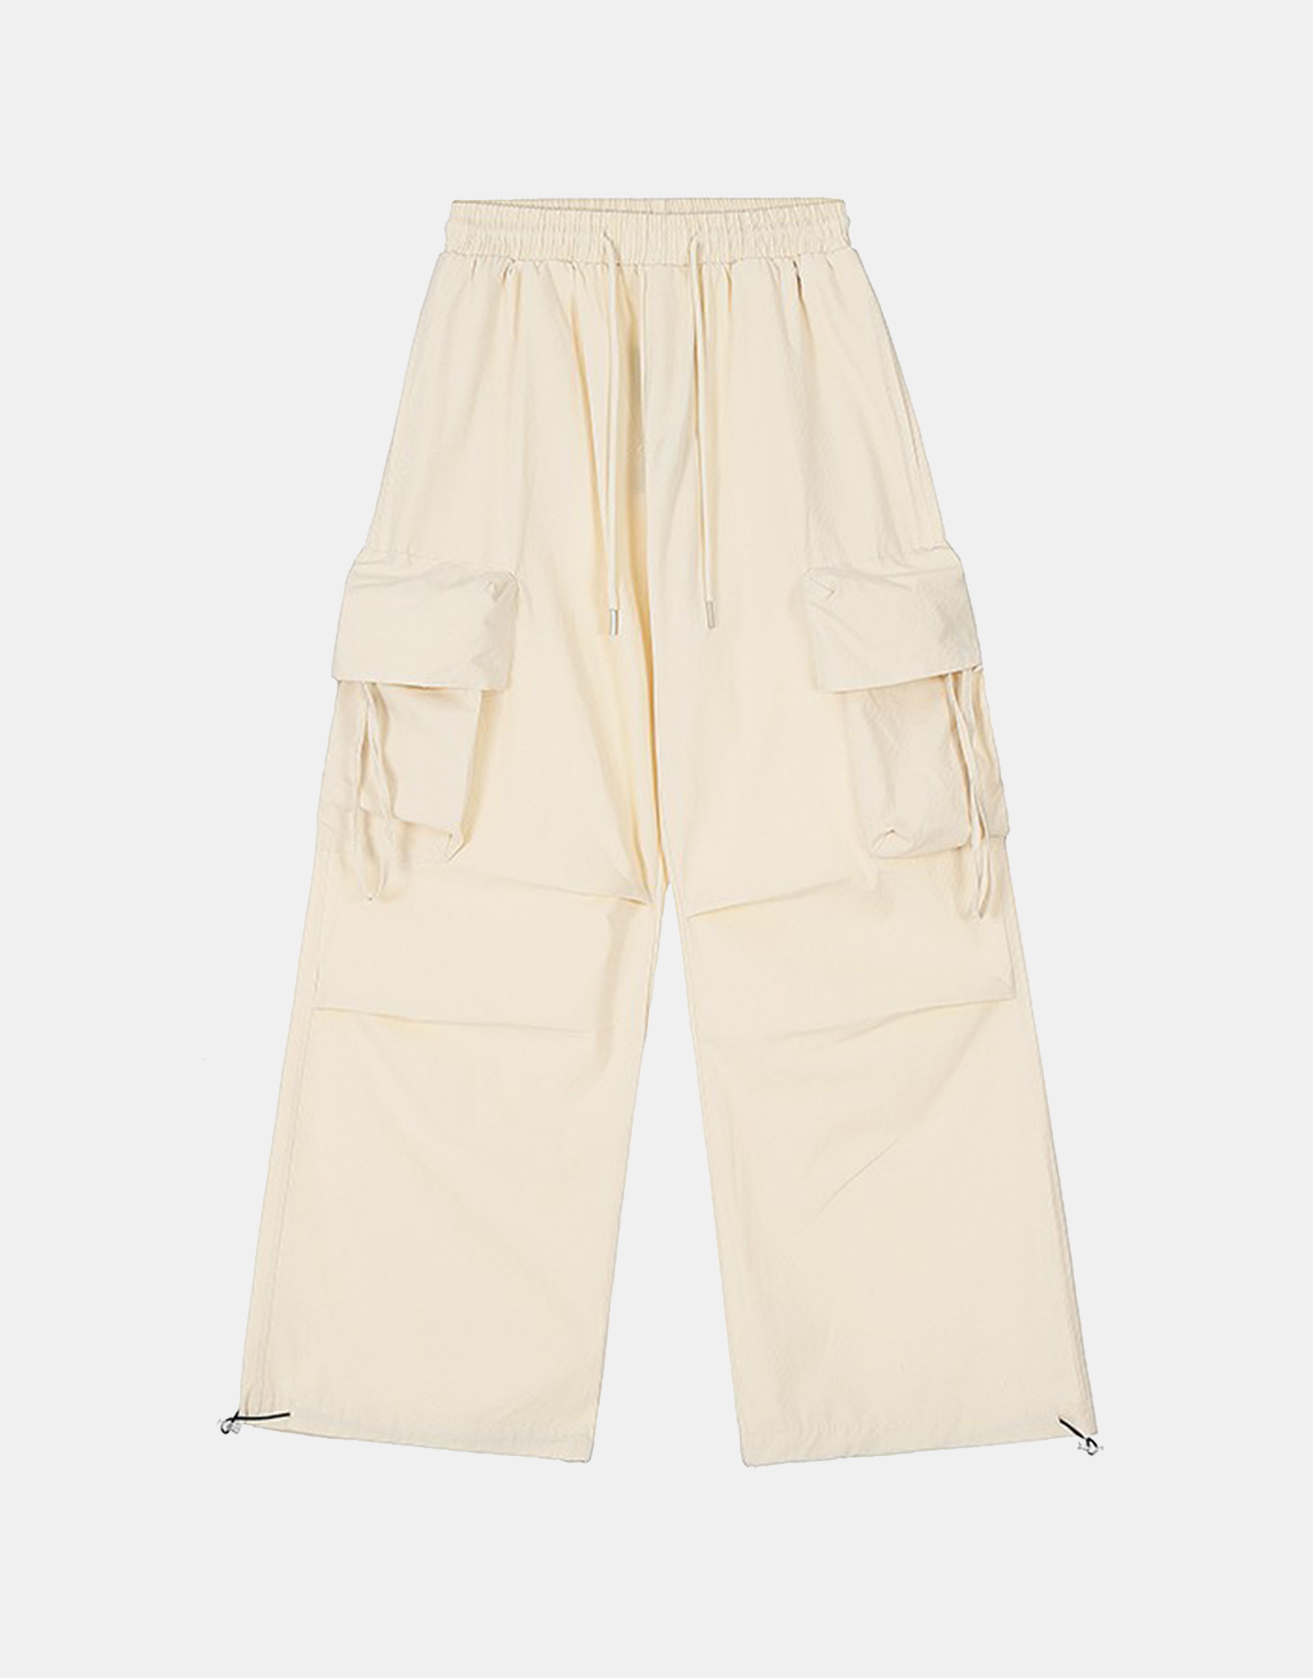 Solid Color Large Pocket Parachute Pants / TECHWEAR CLUB / Techwear